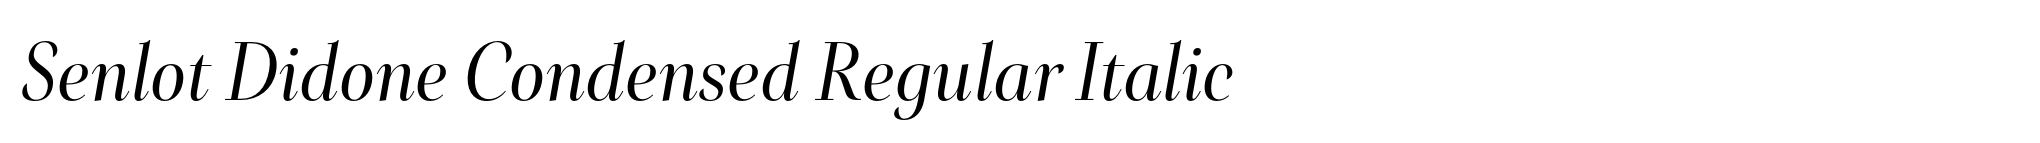 Senlot Didone Condensed Regular Italic image